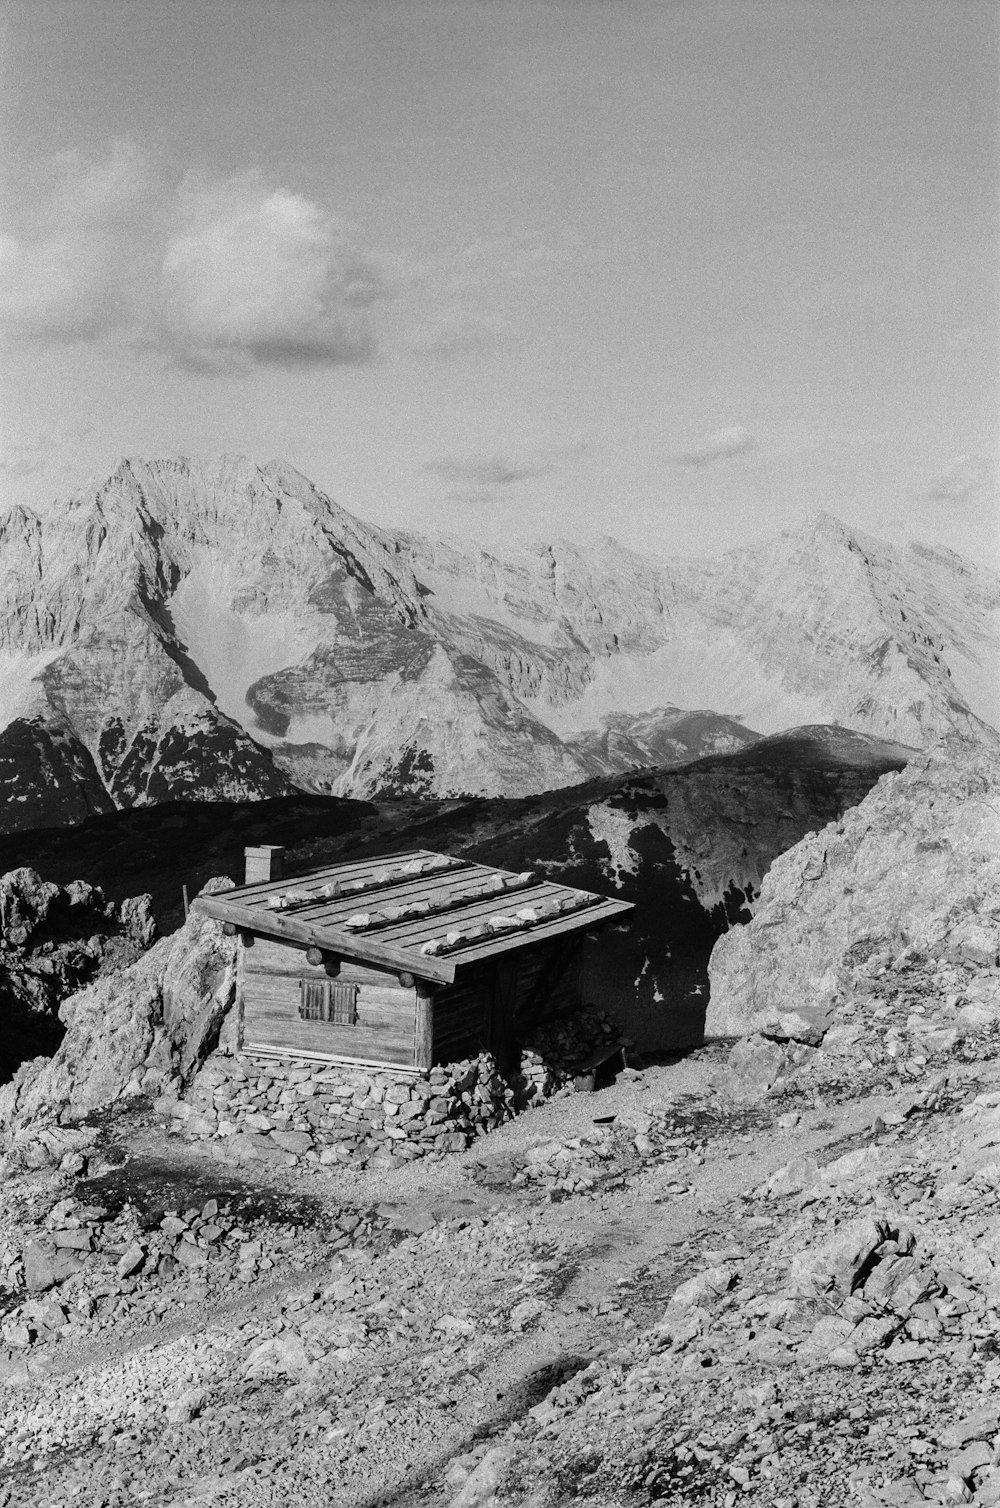 a house on a mountain